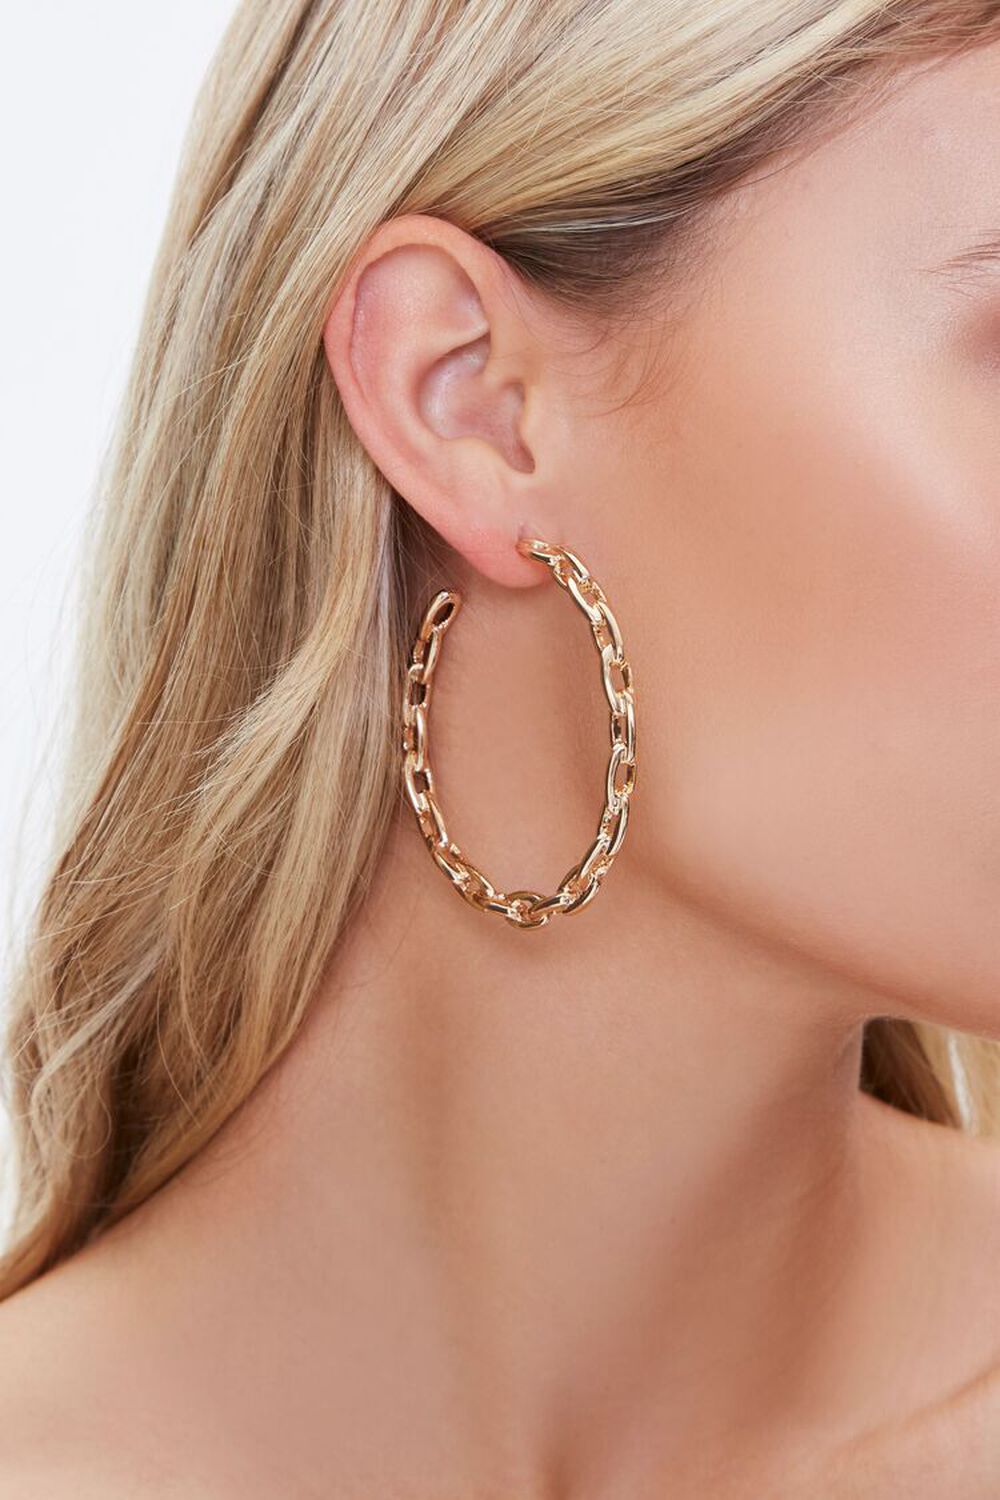 GOLD Anchor Chain Hoop Earrings, image 1